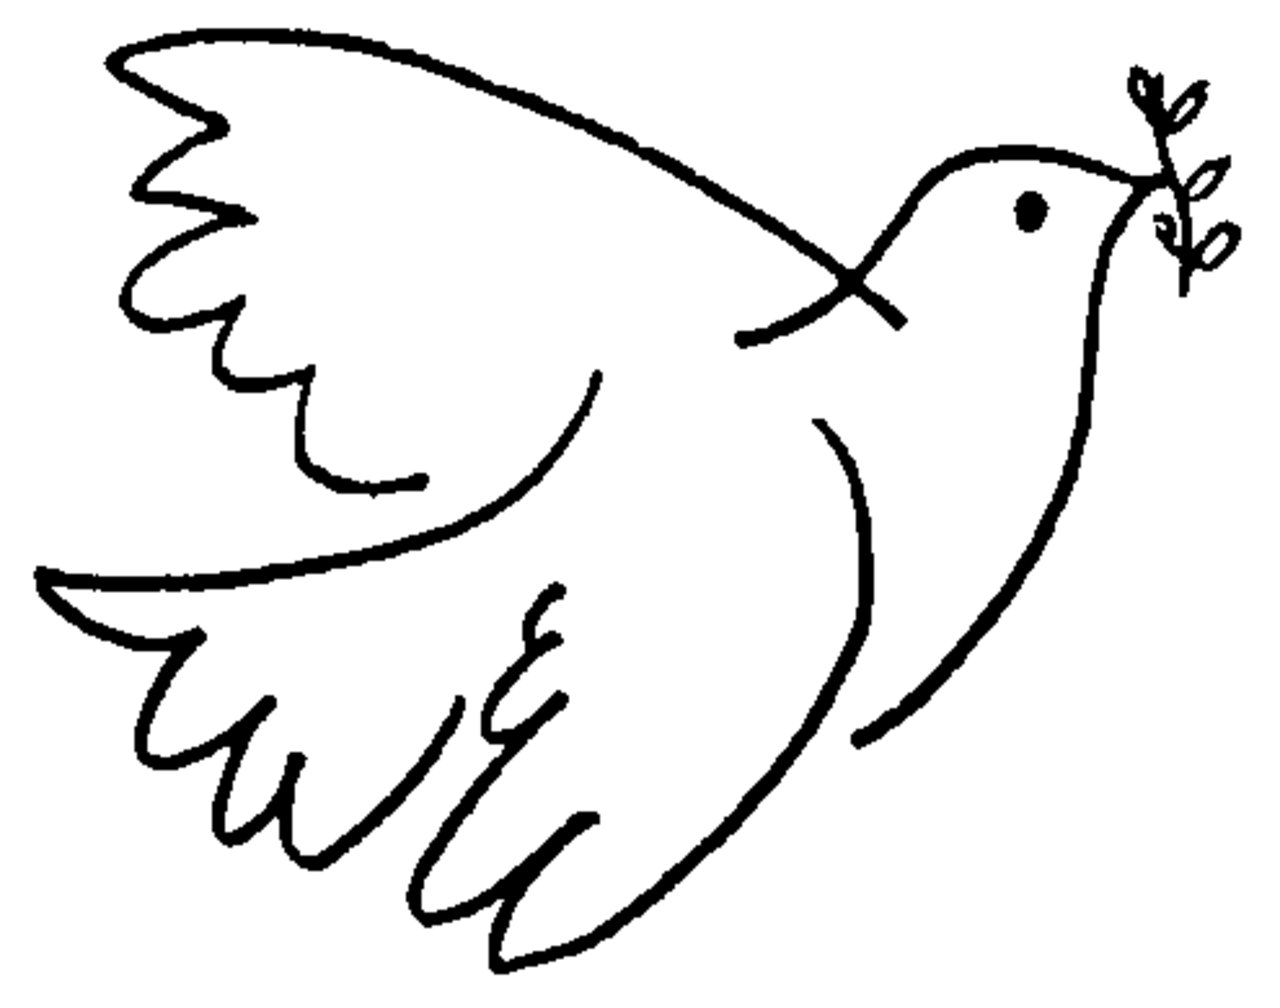 Símbolo de la paz. Foto: sabestusderechos.blogspot.com